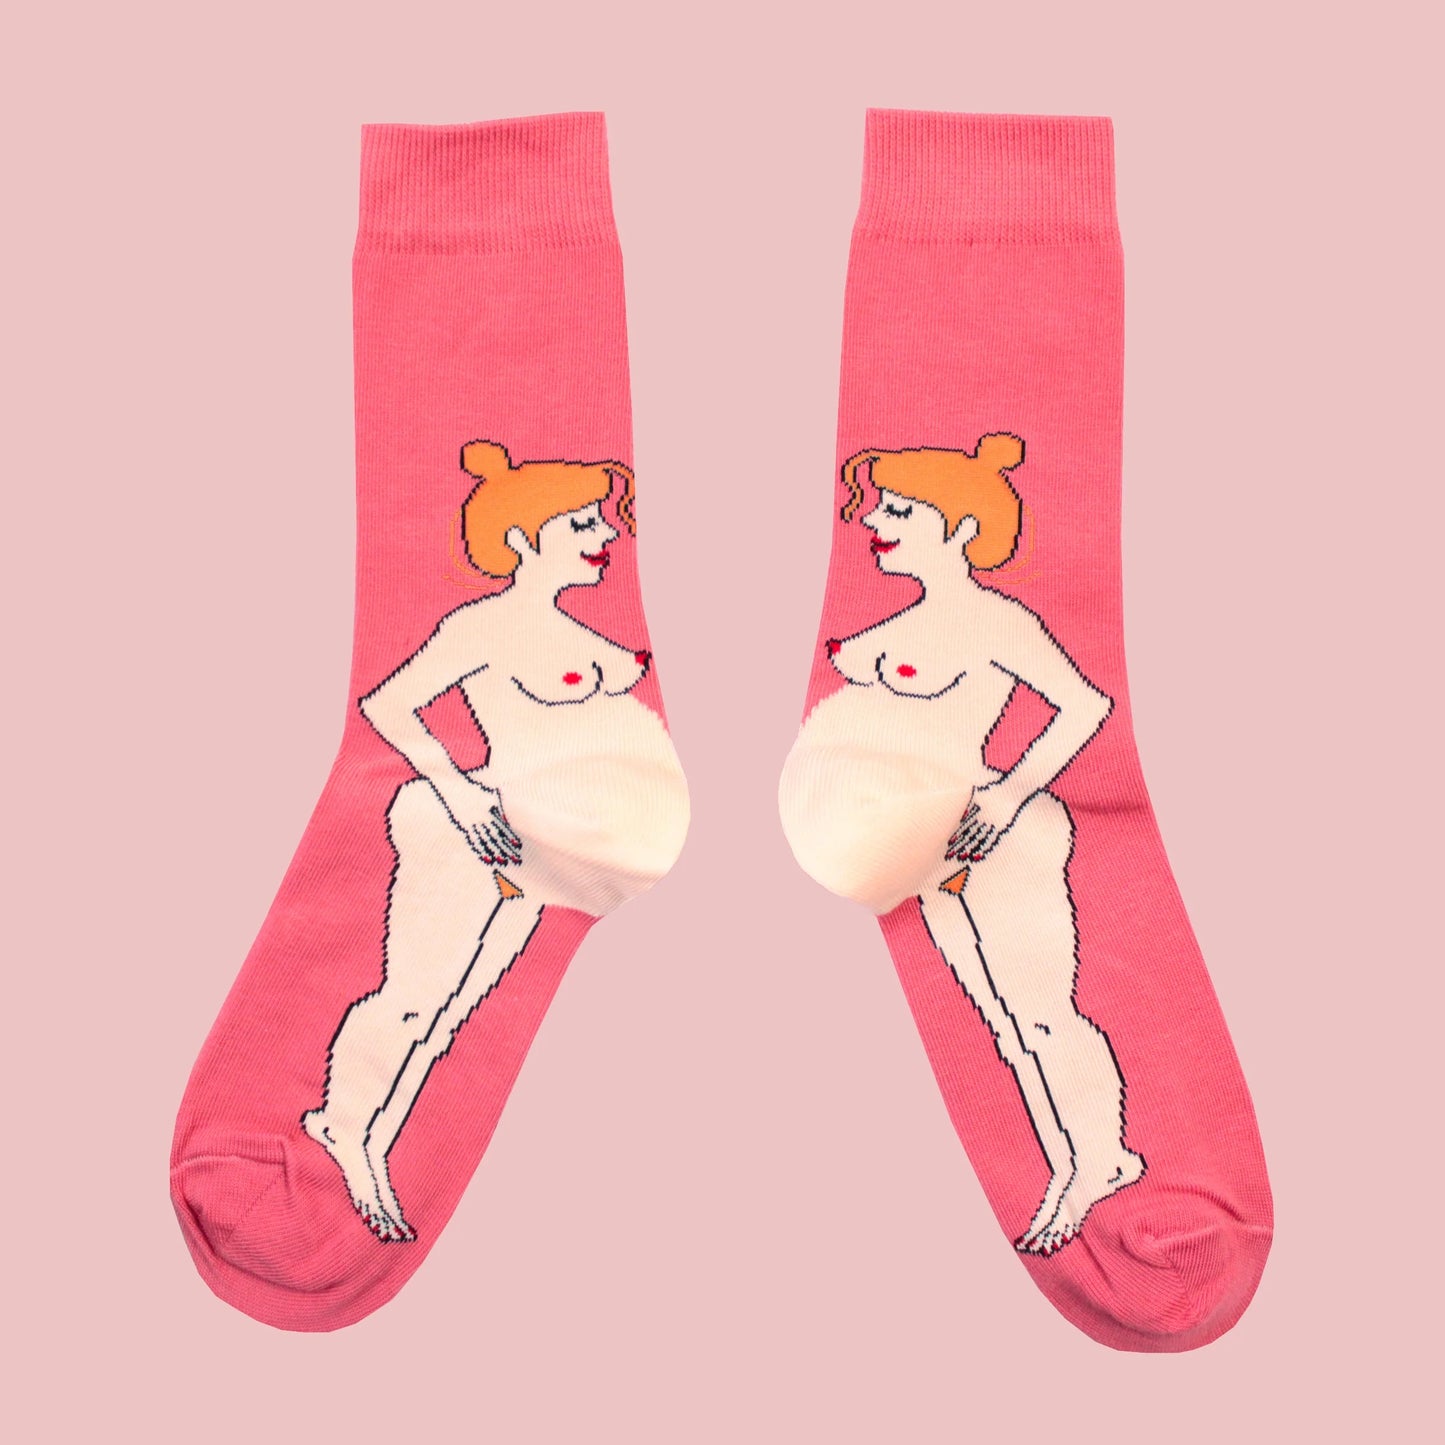 Pregnant Woman Socks - Redhead